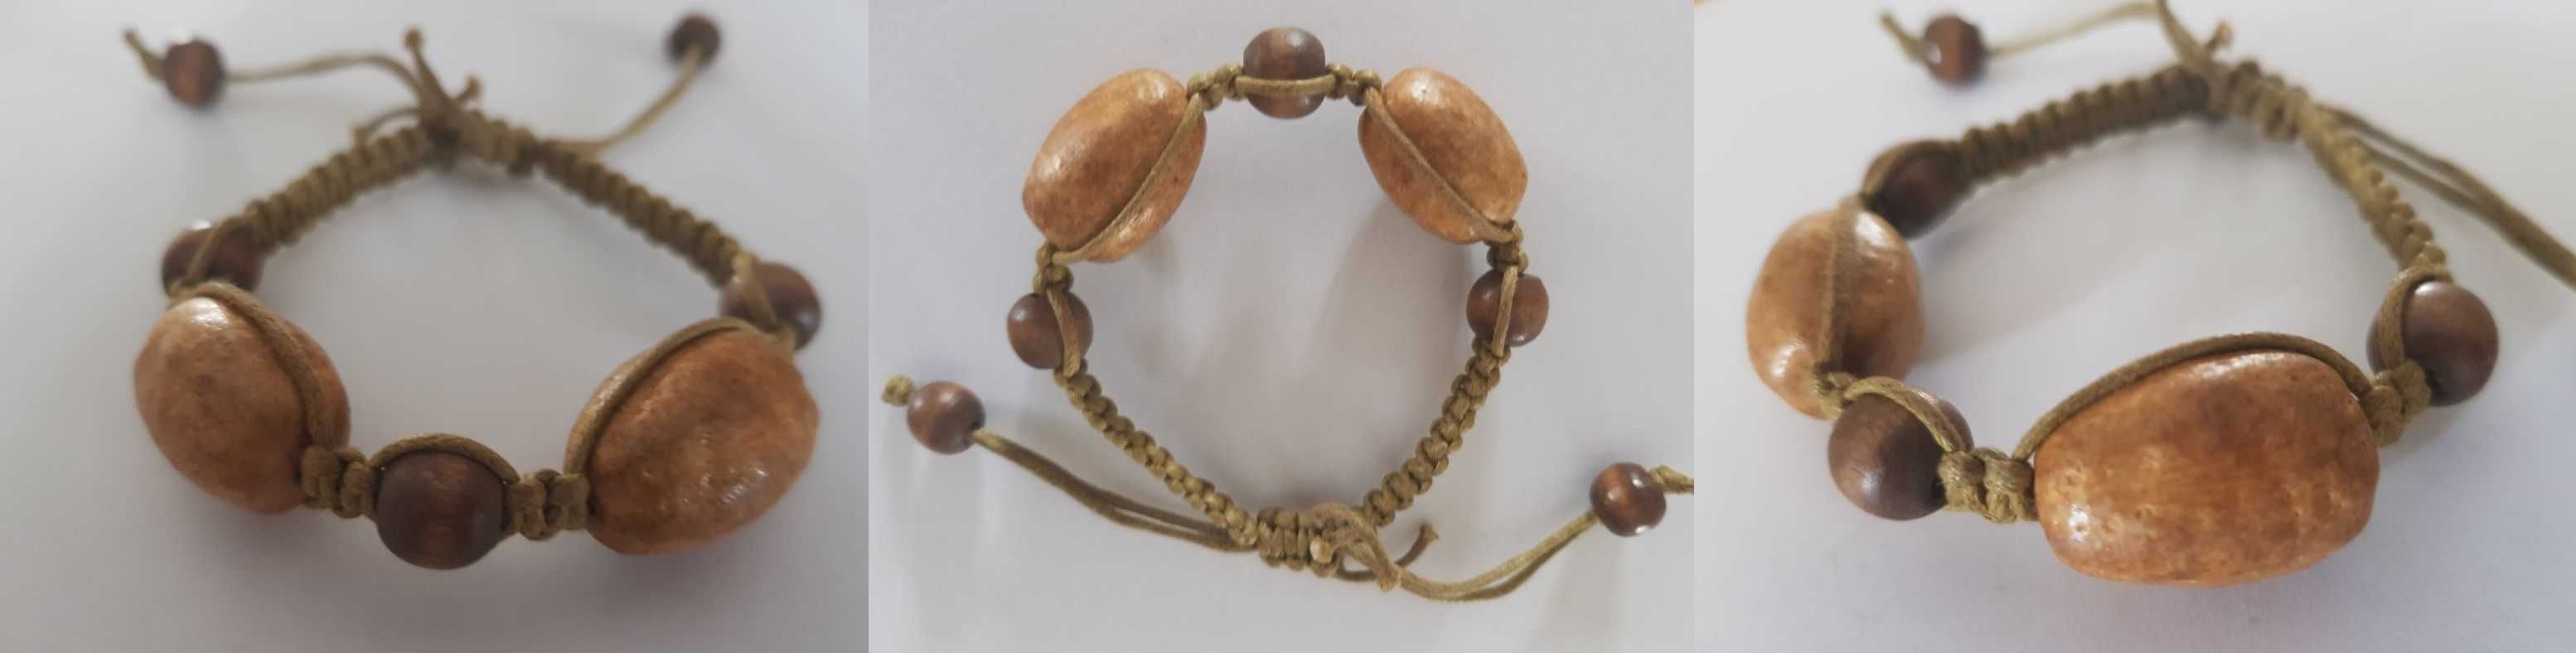 skarabeusz talizman bransoletka biżuteria afrykańska wisiorek amulet